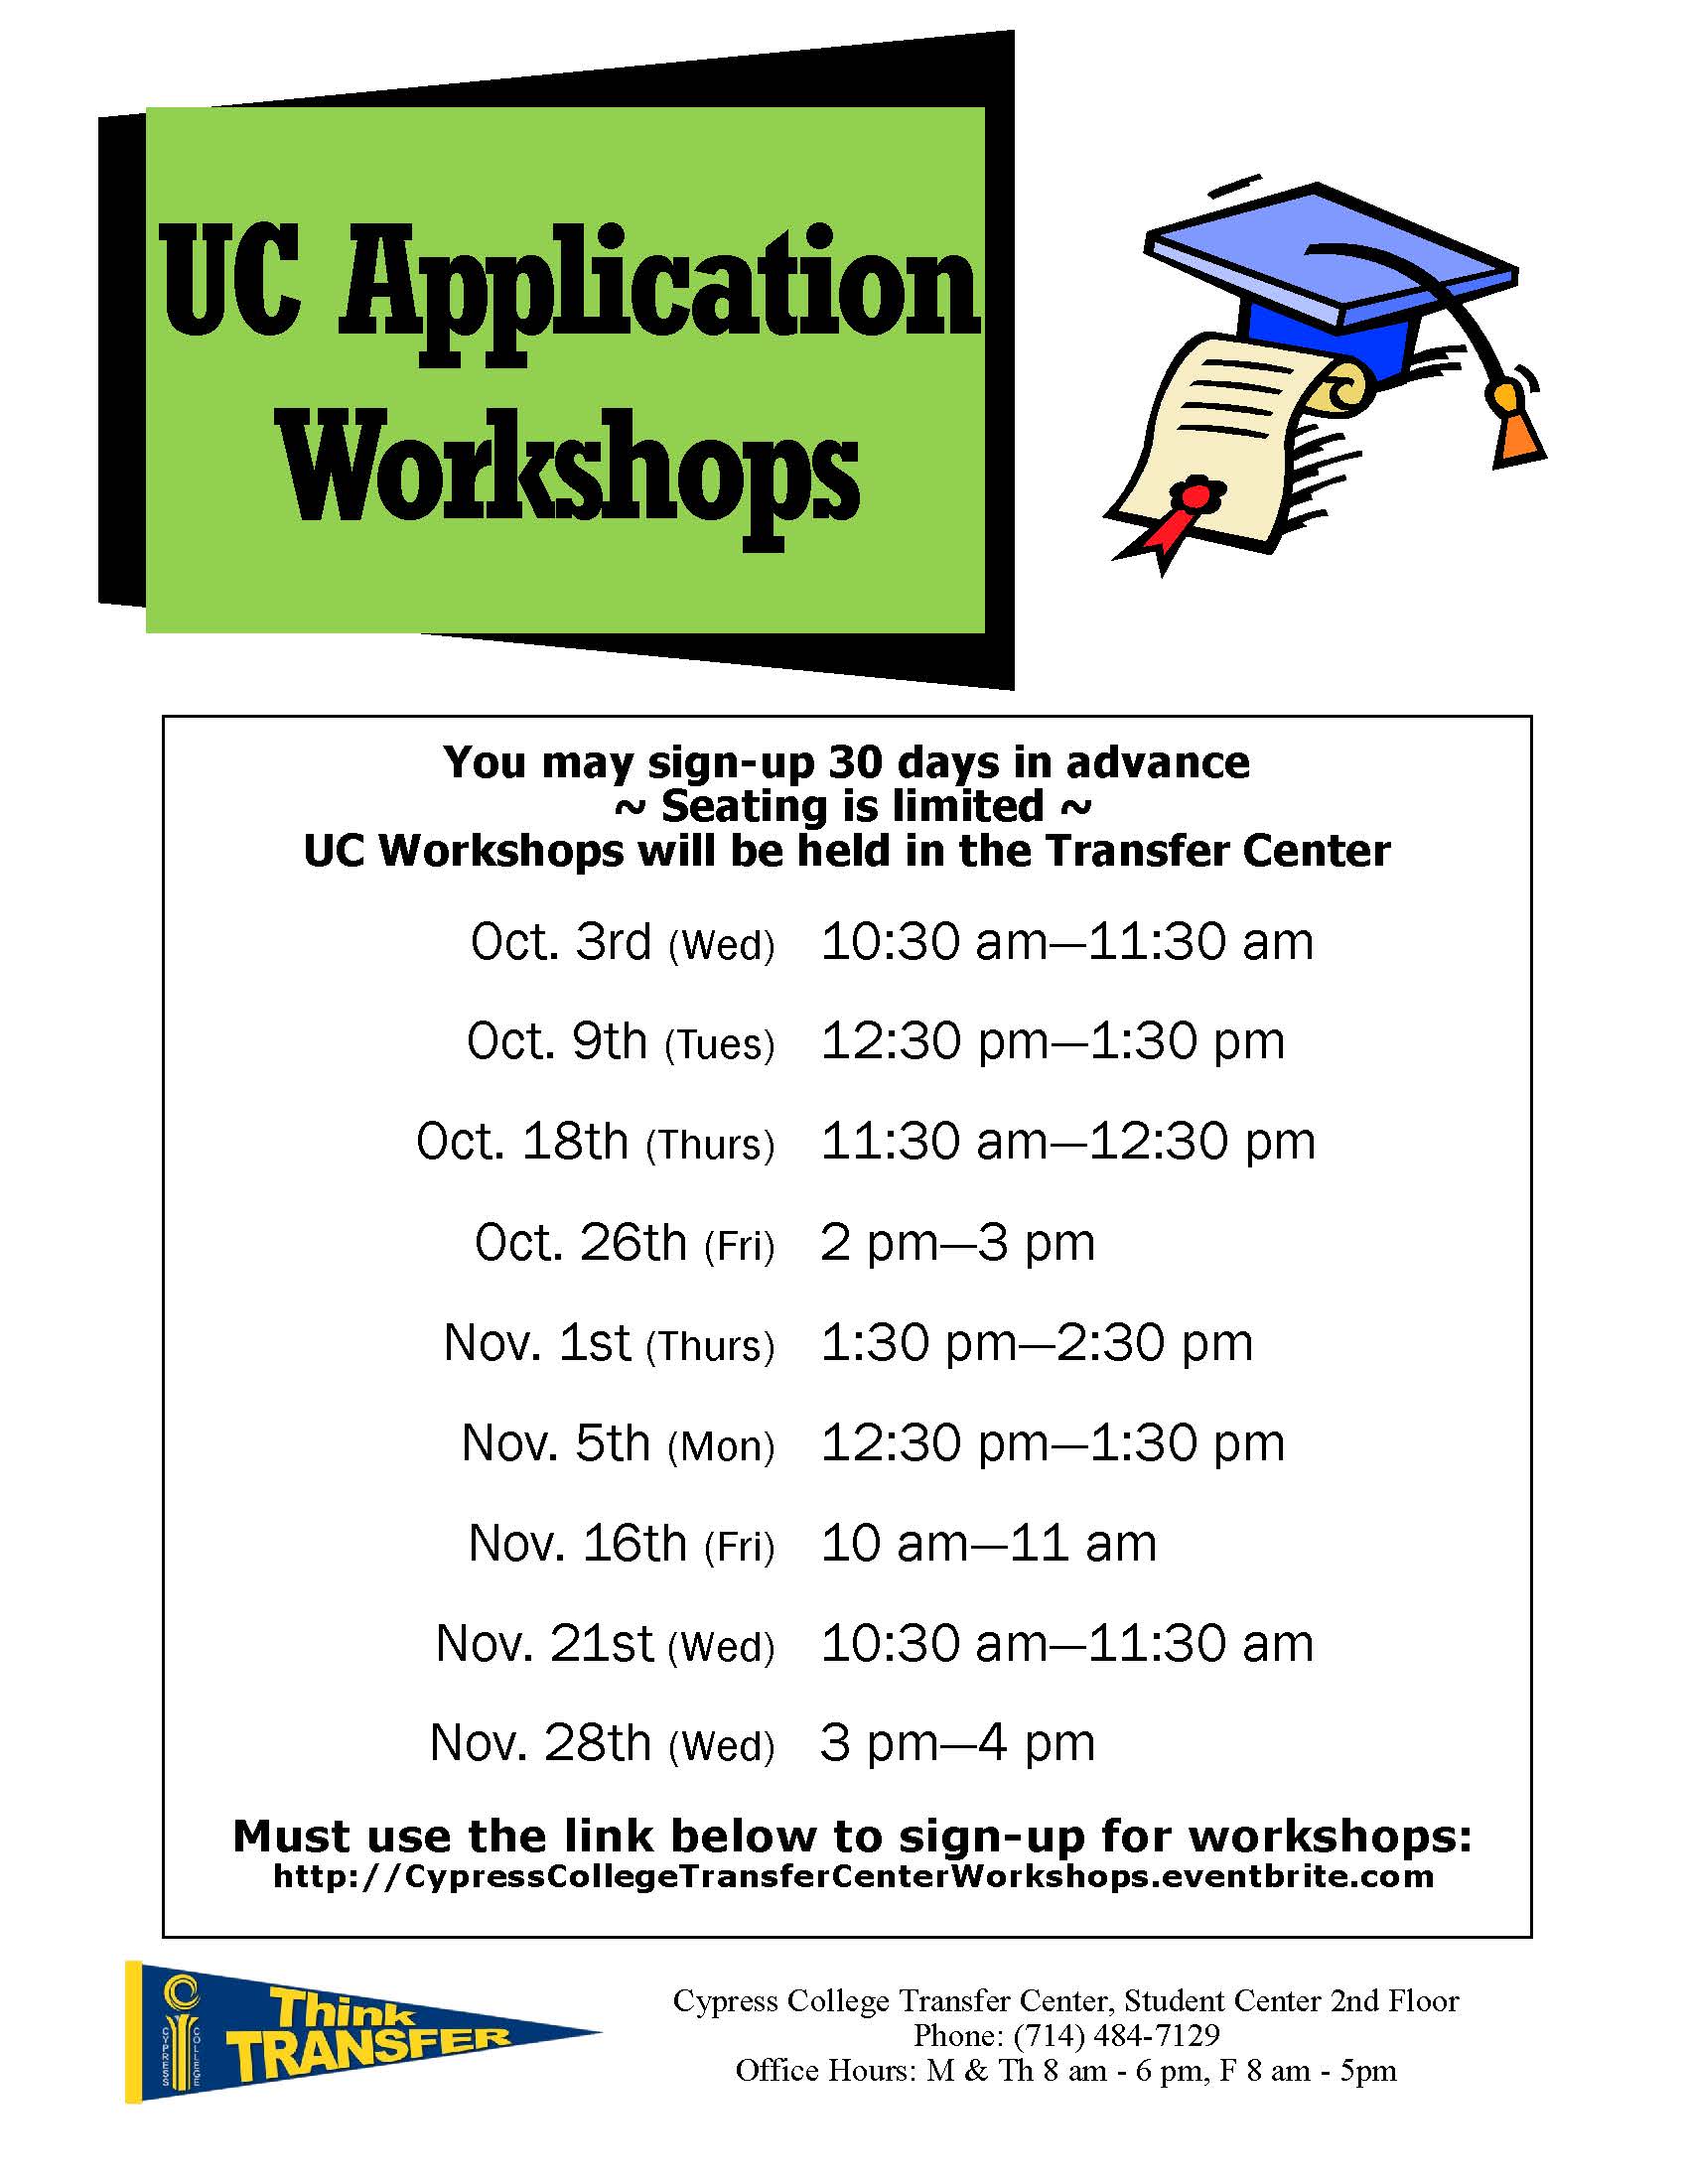 UC Applications Workshops flyer.